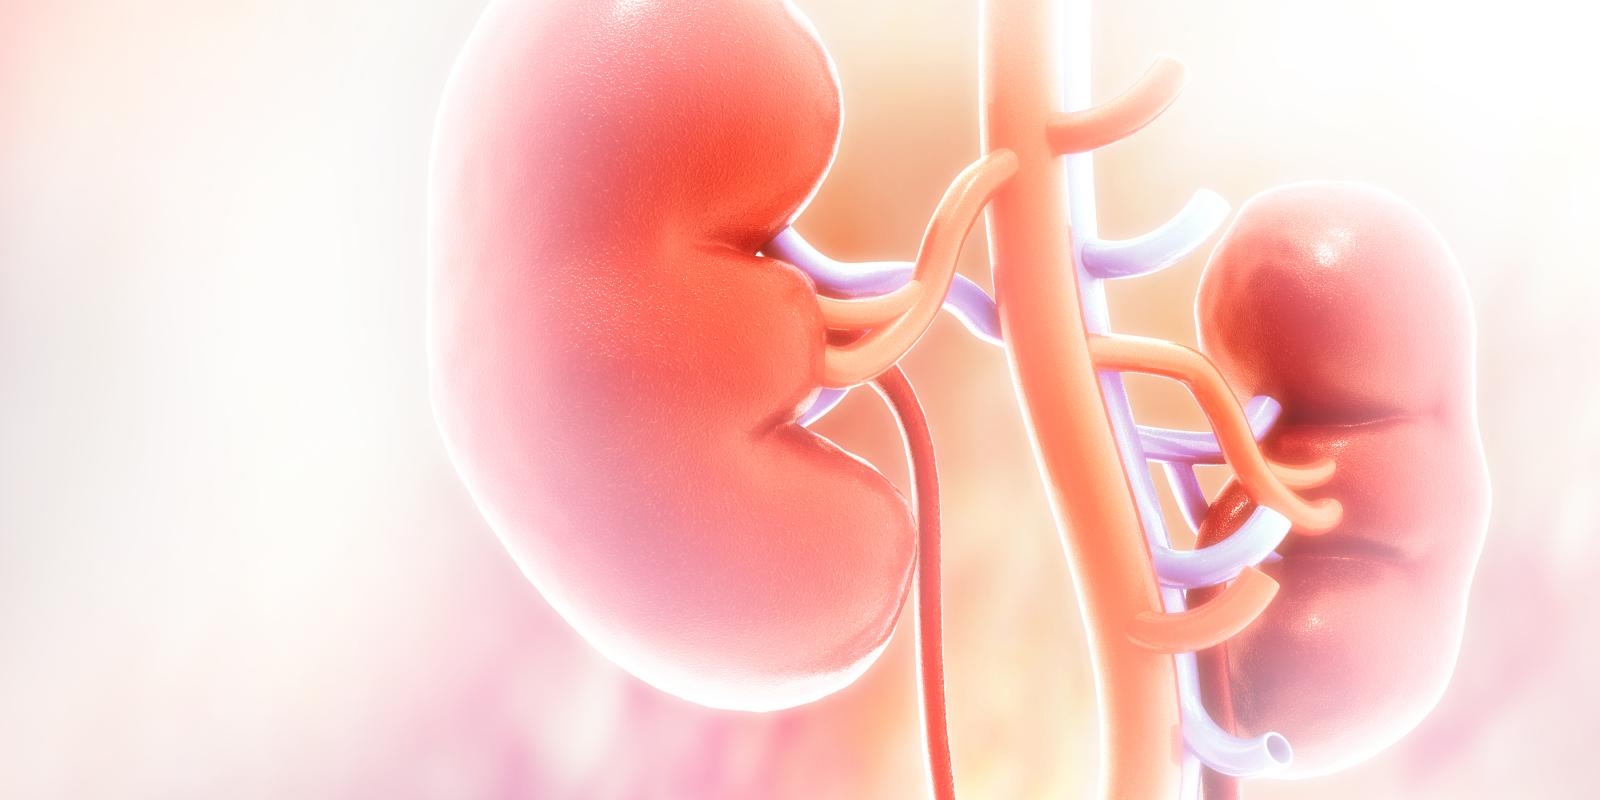 kidneys pink body